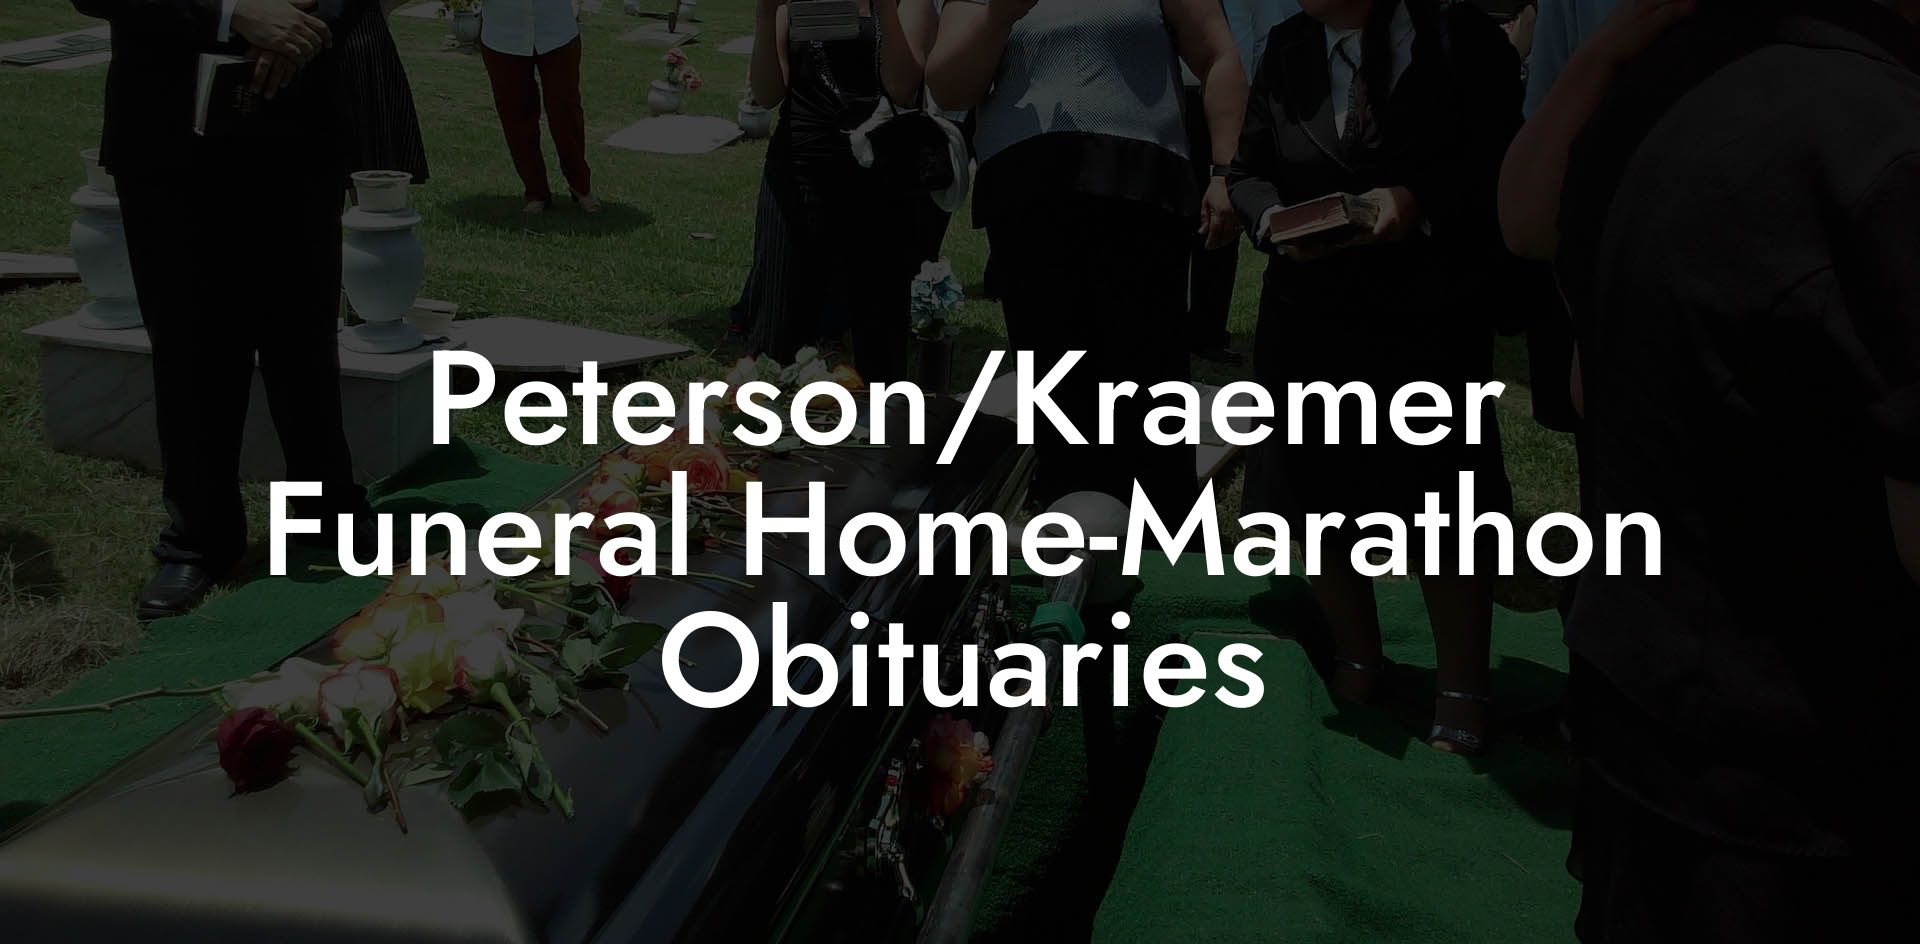 Peterson/Kraemer Funeral Home-Marathon Obituaries